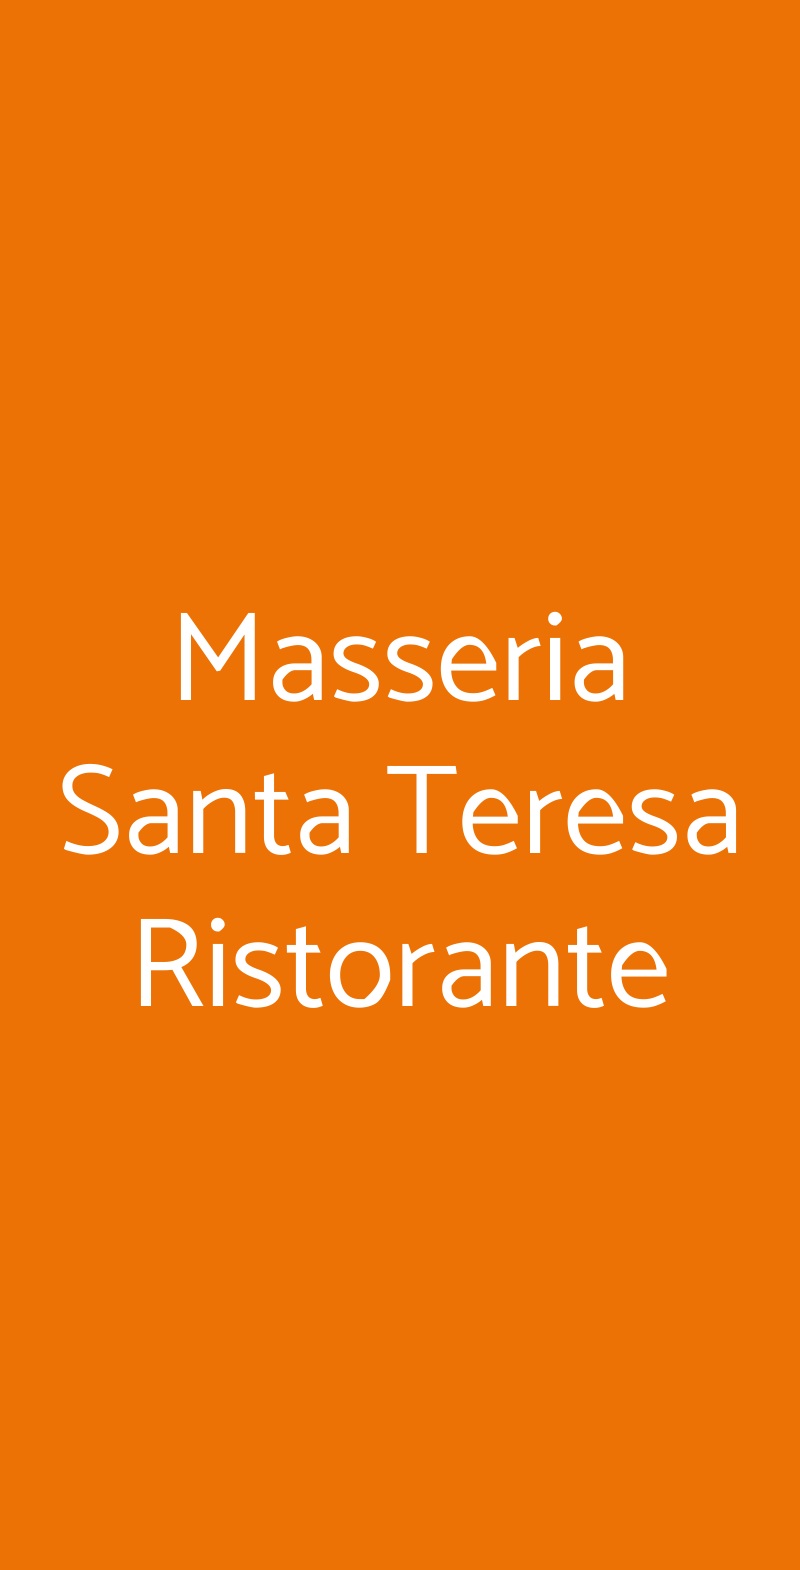 Masseria Santa Teresa Ristorante Sannicola menù 1 pagina